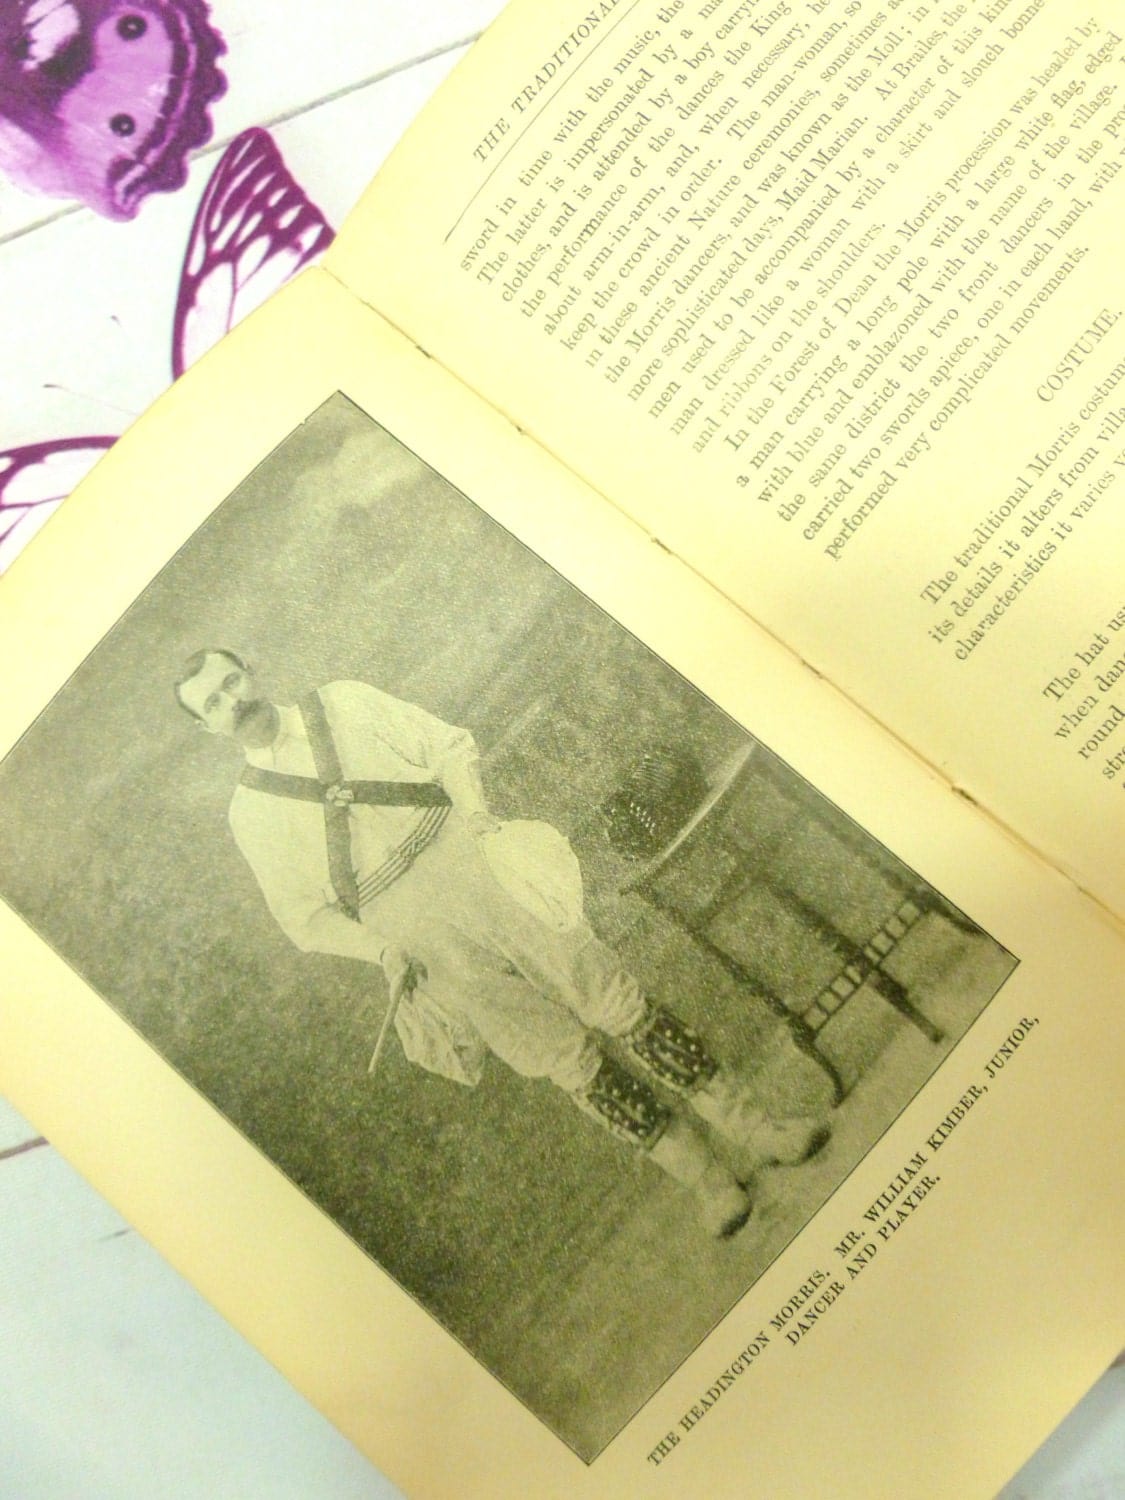 Antique Morris Dancing Book, The Morris Book by Cecil J Sharp Rare Original Edition Hardback dated 1912